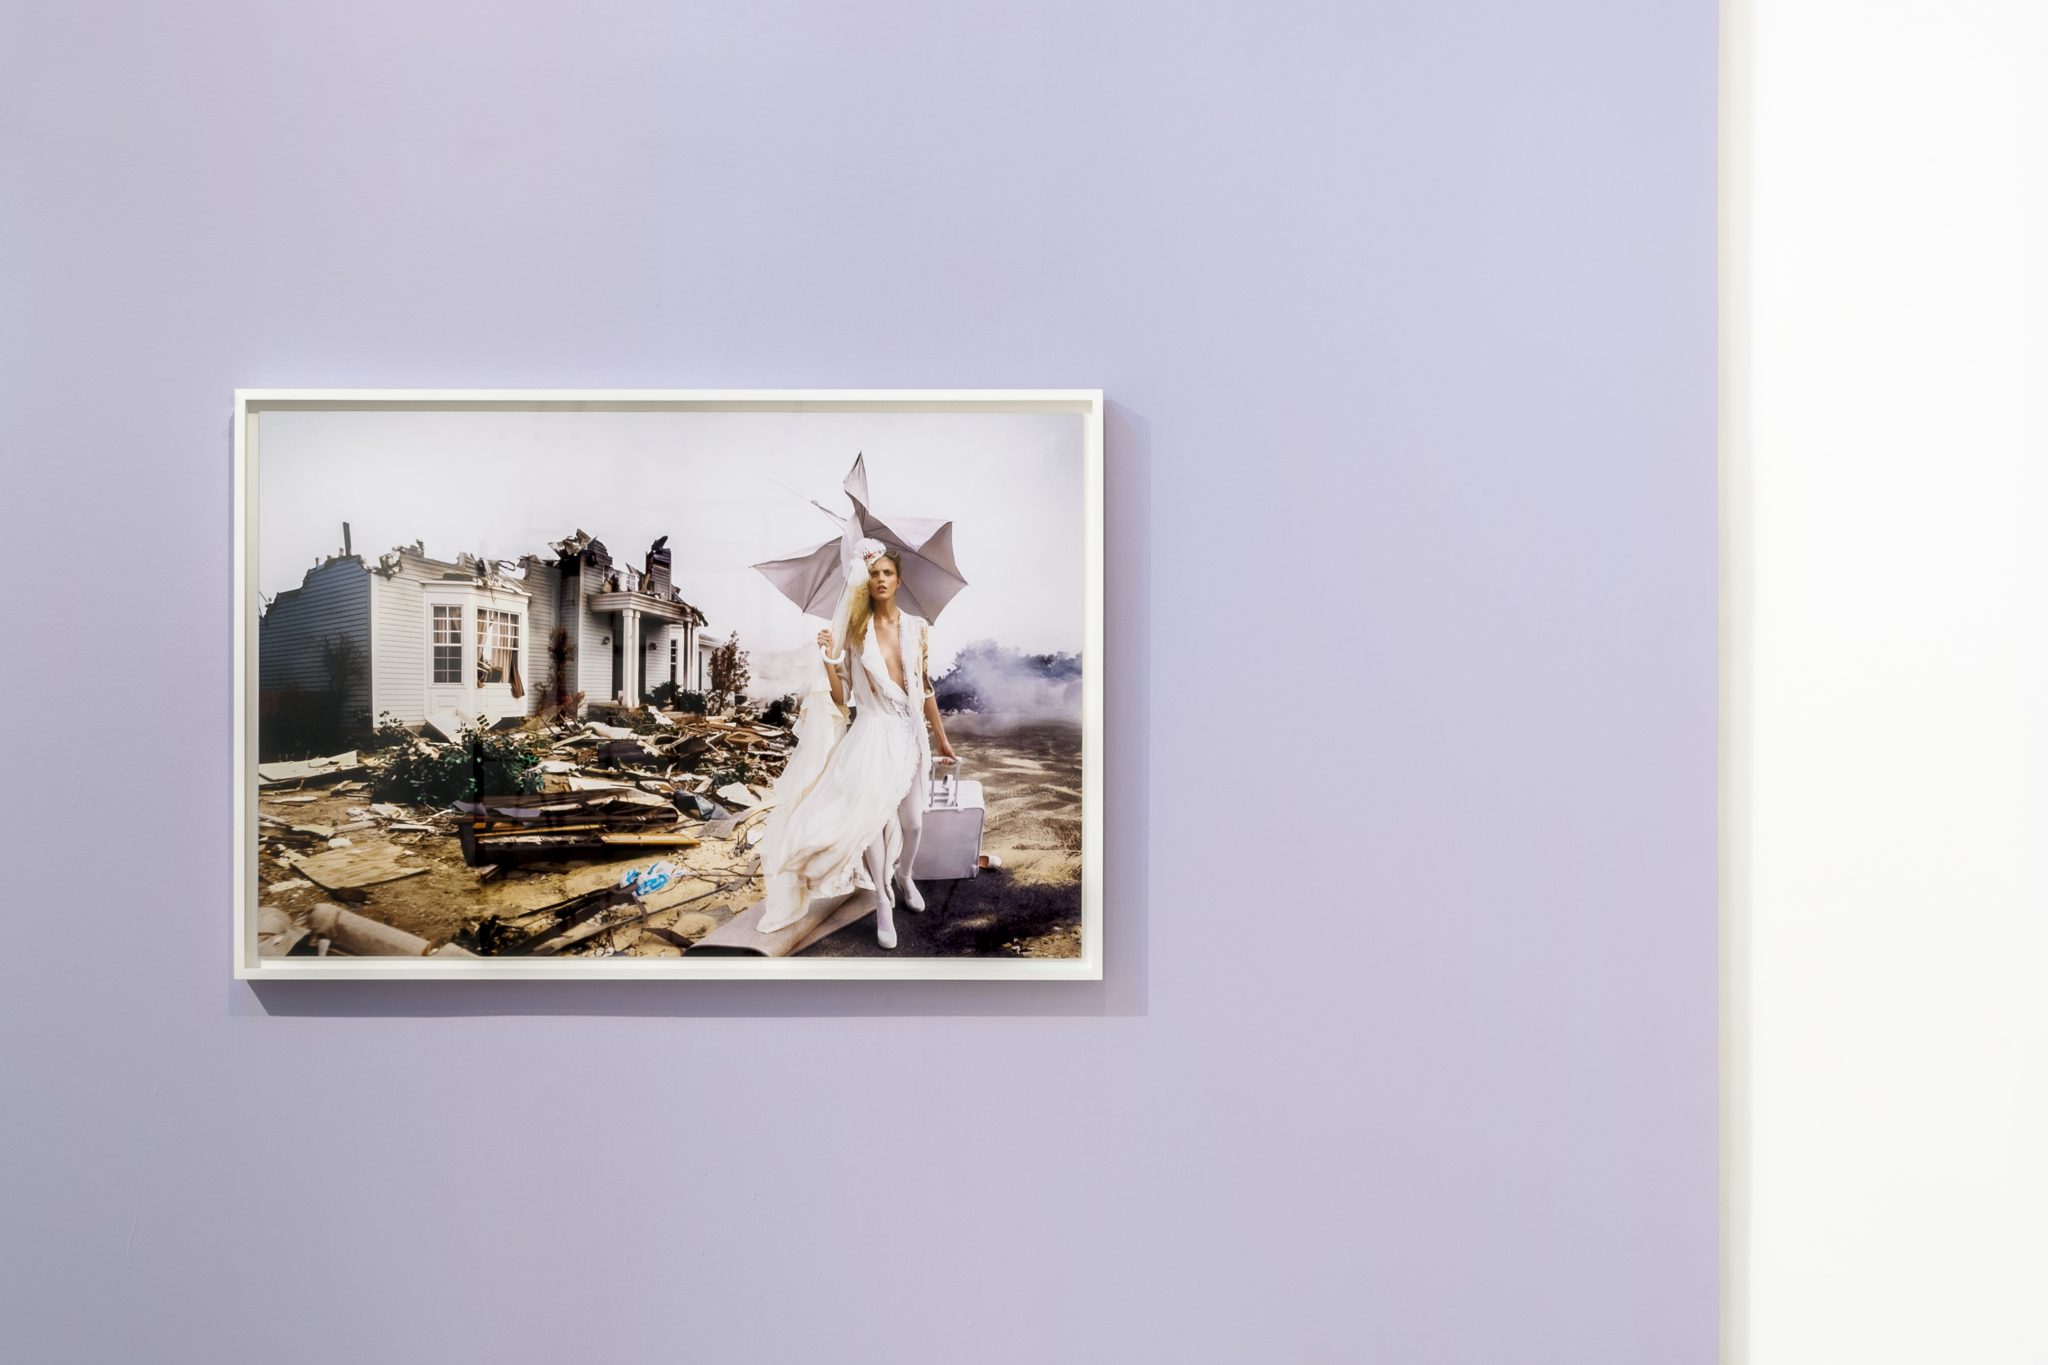 David LaChapelle | MUSEO DE ARTE CONTEMPORÁNEO, Santiago, Chile, July 20 - September 27, 2015 | 6